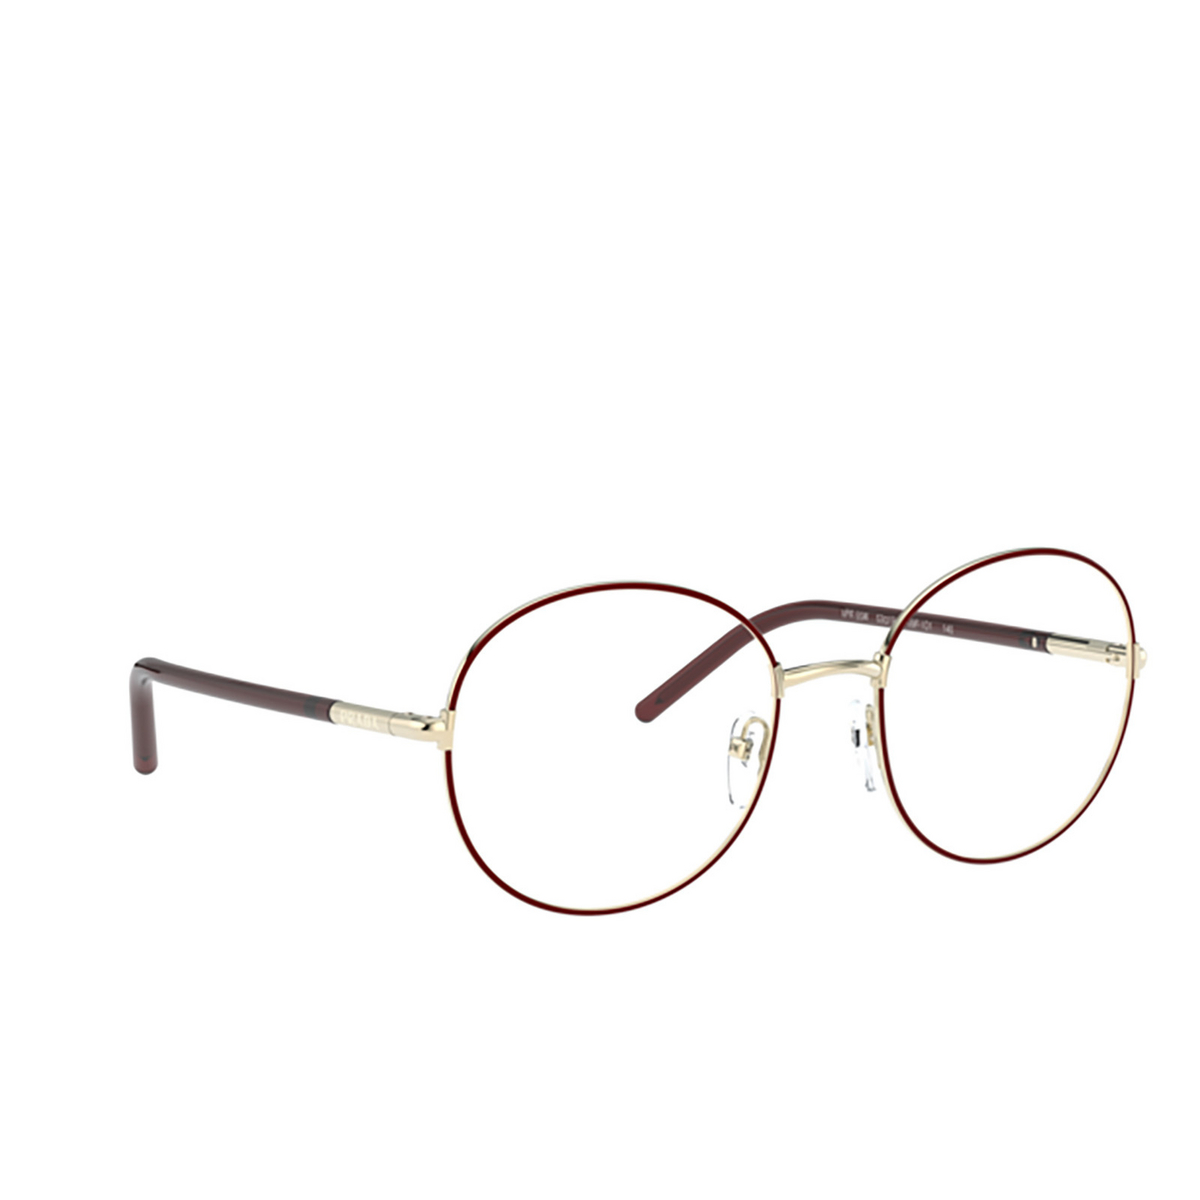 Prada® Round Eyeglasses: PR 55WV color Pale Gold / Bordeaux 09P1O1 - 2/3.